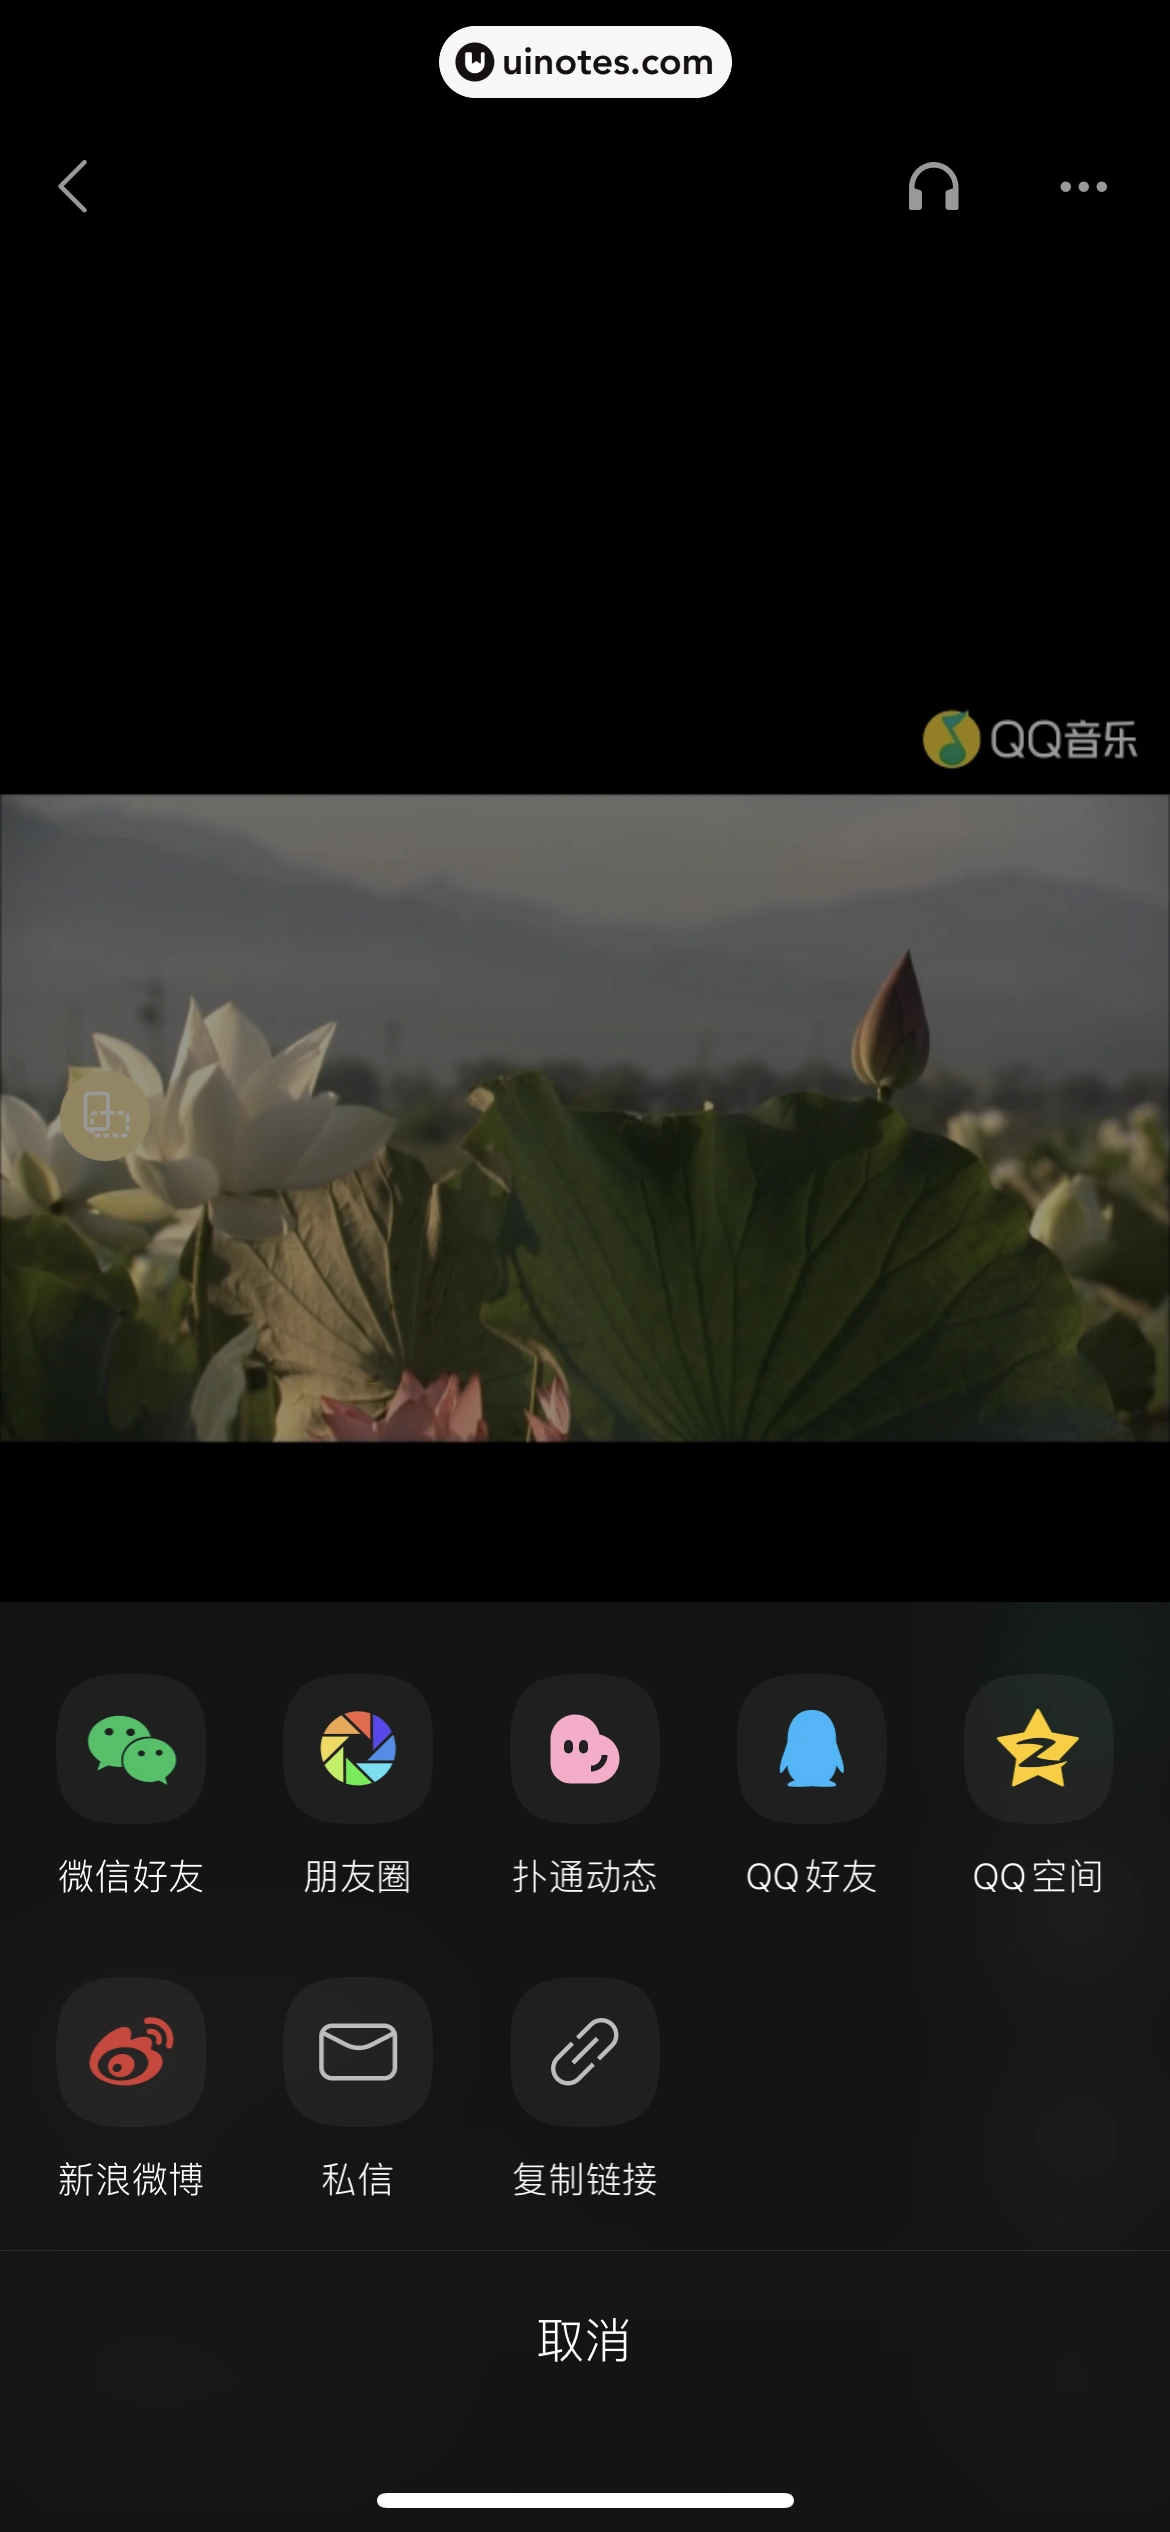 QQ音乐 App 截图 120 - UI Notes